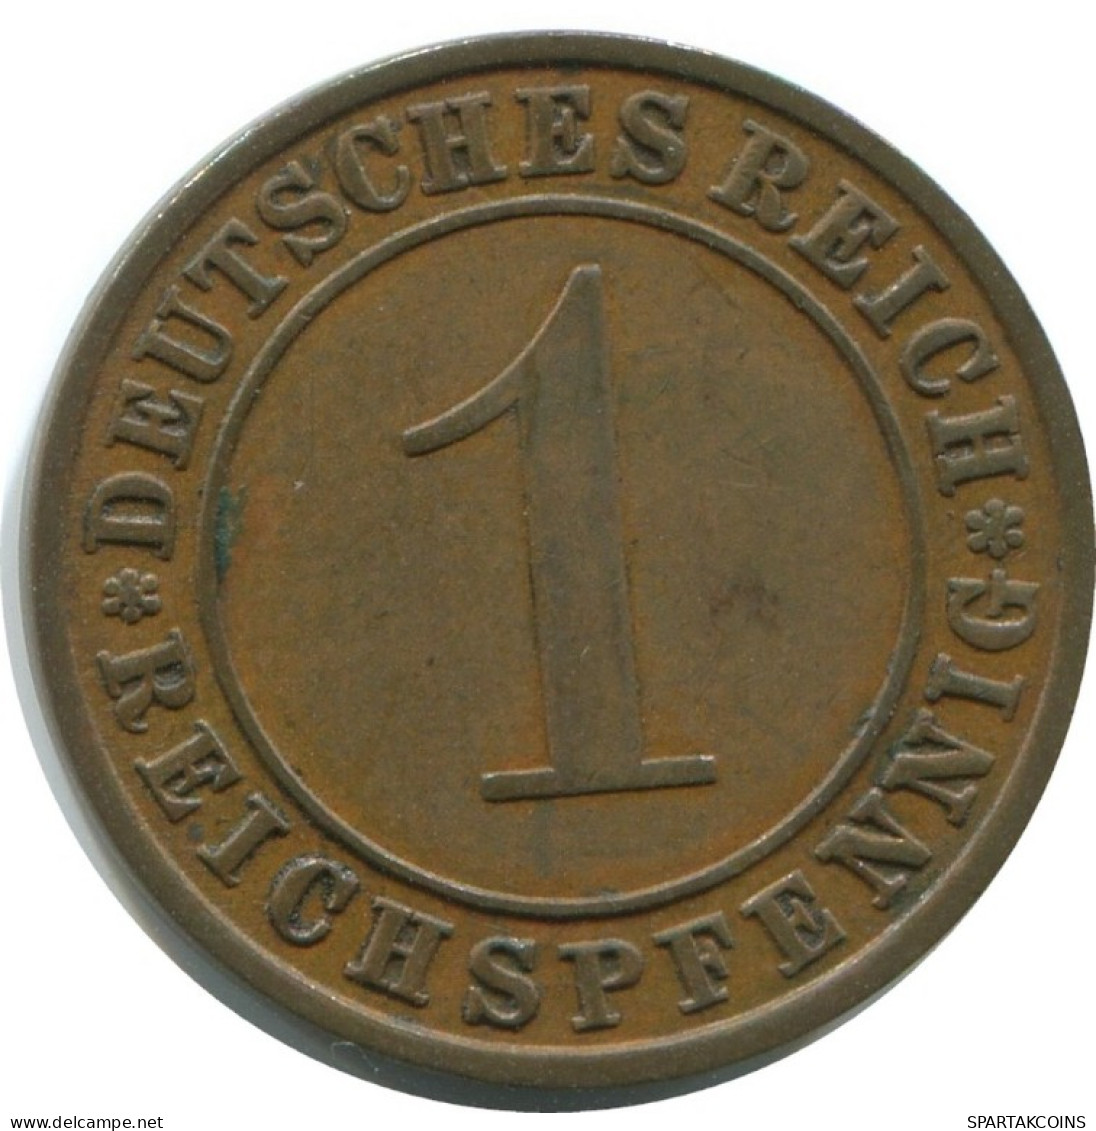 1 REICHSPFENNIG 1931 A ALEMANIA Moneda GERMANY #AE240.E.A - 1 Reichspfennig